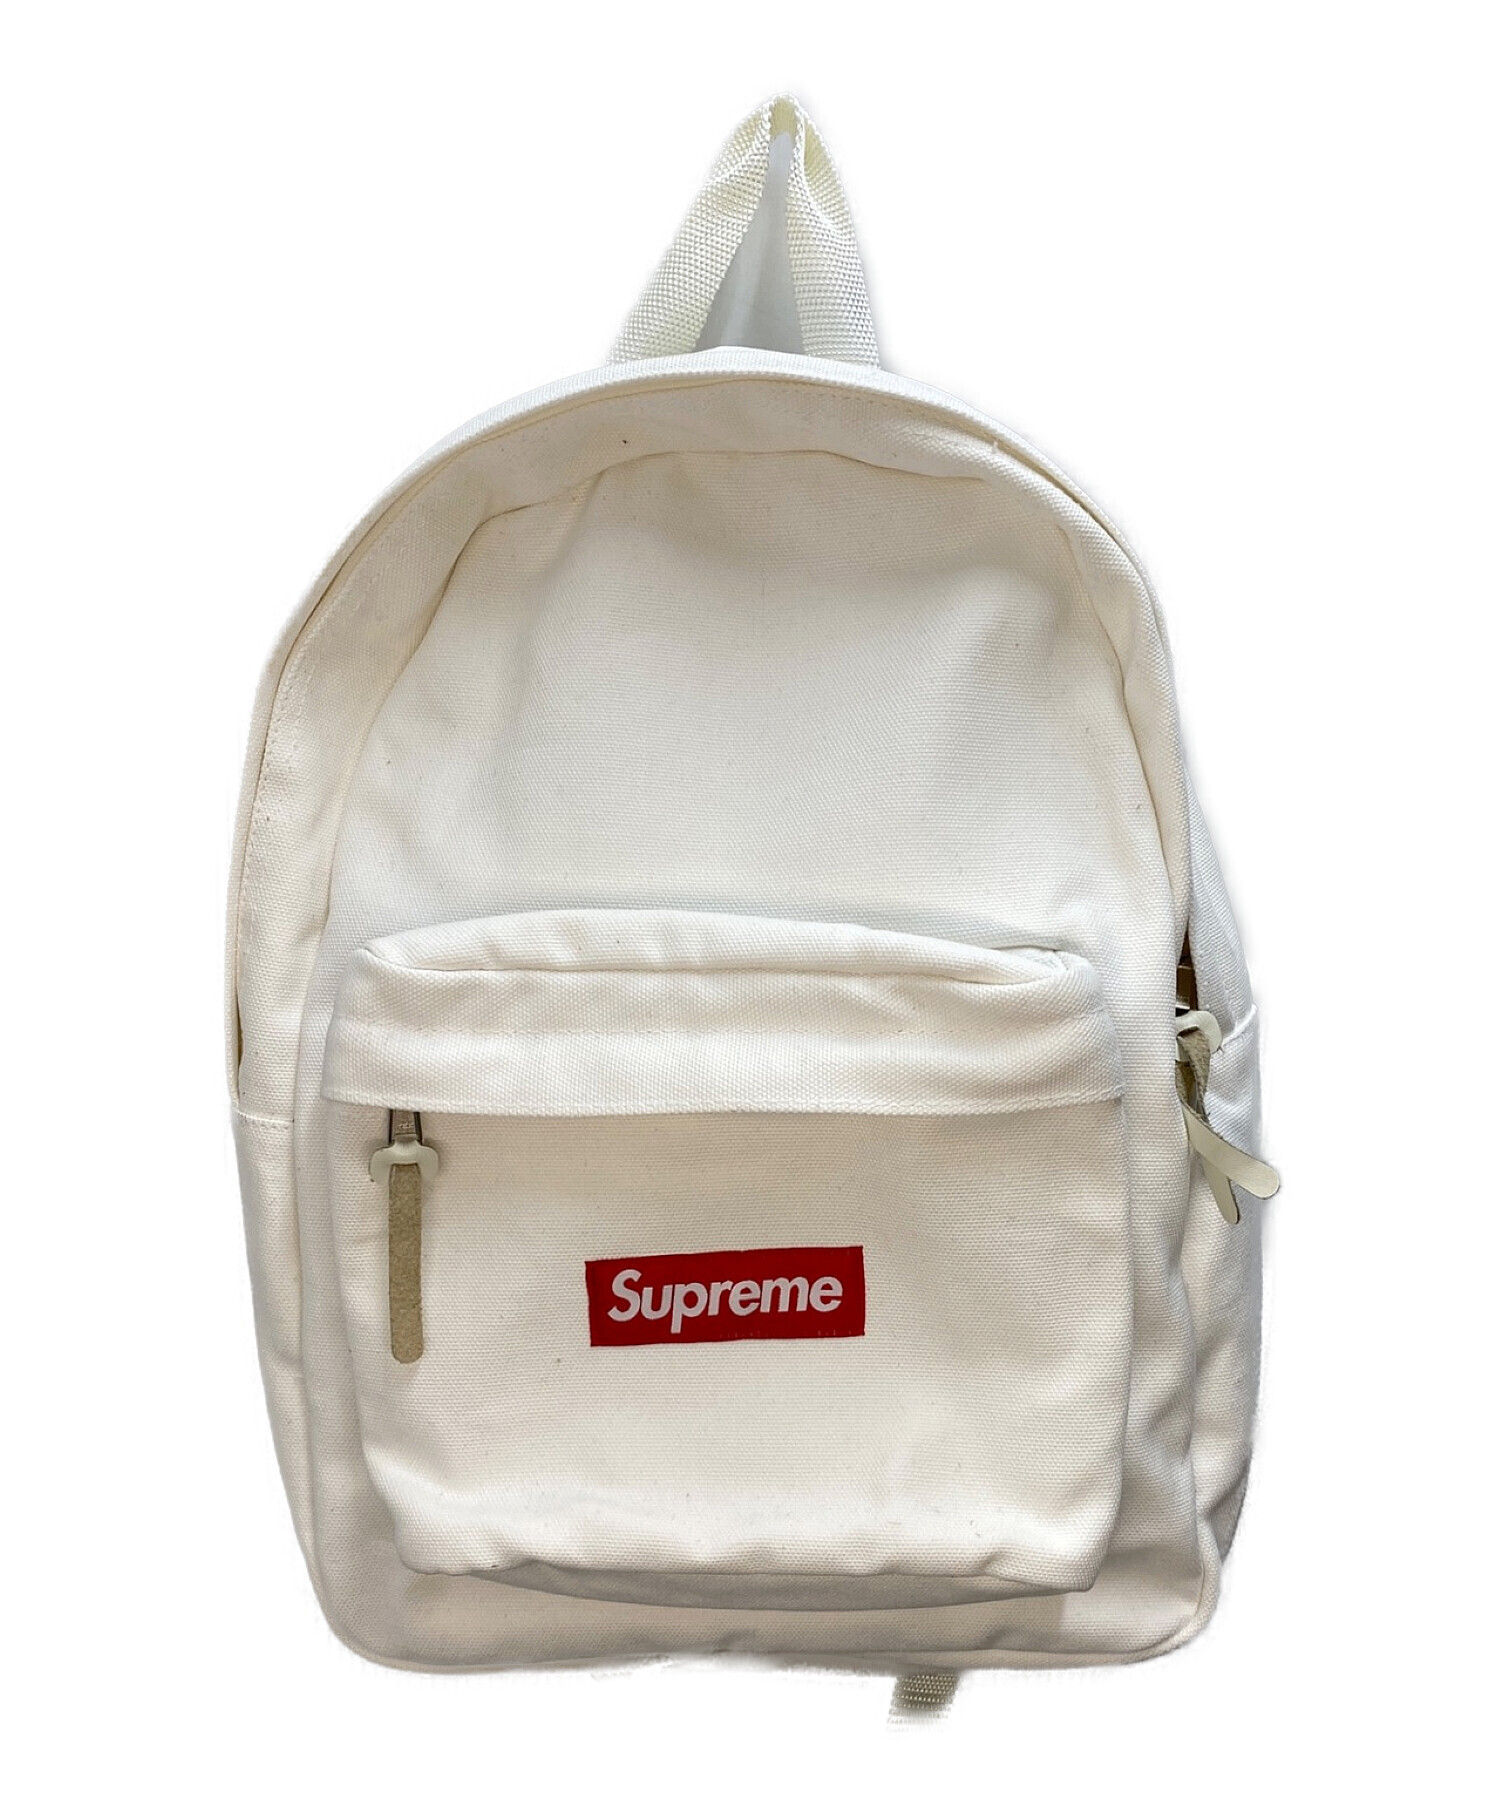 Supreme (シュプリーム) Canvas Backpack ホワイト×レッド